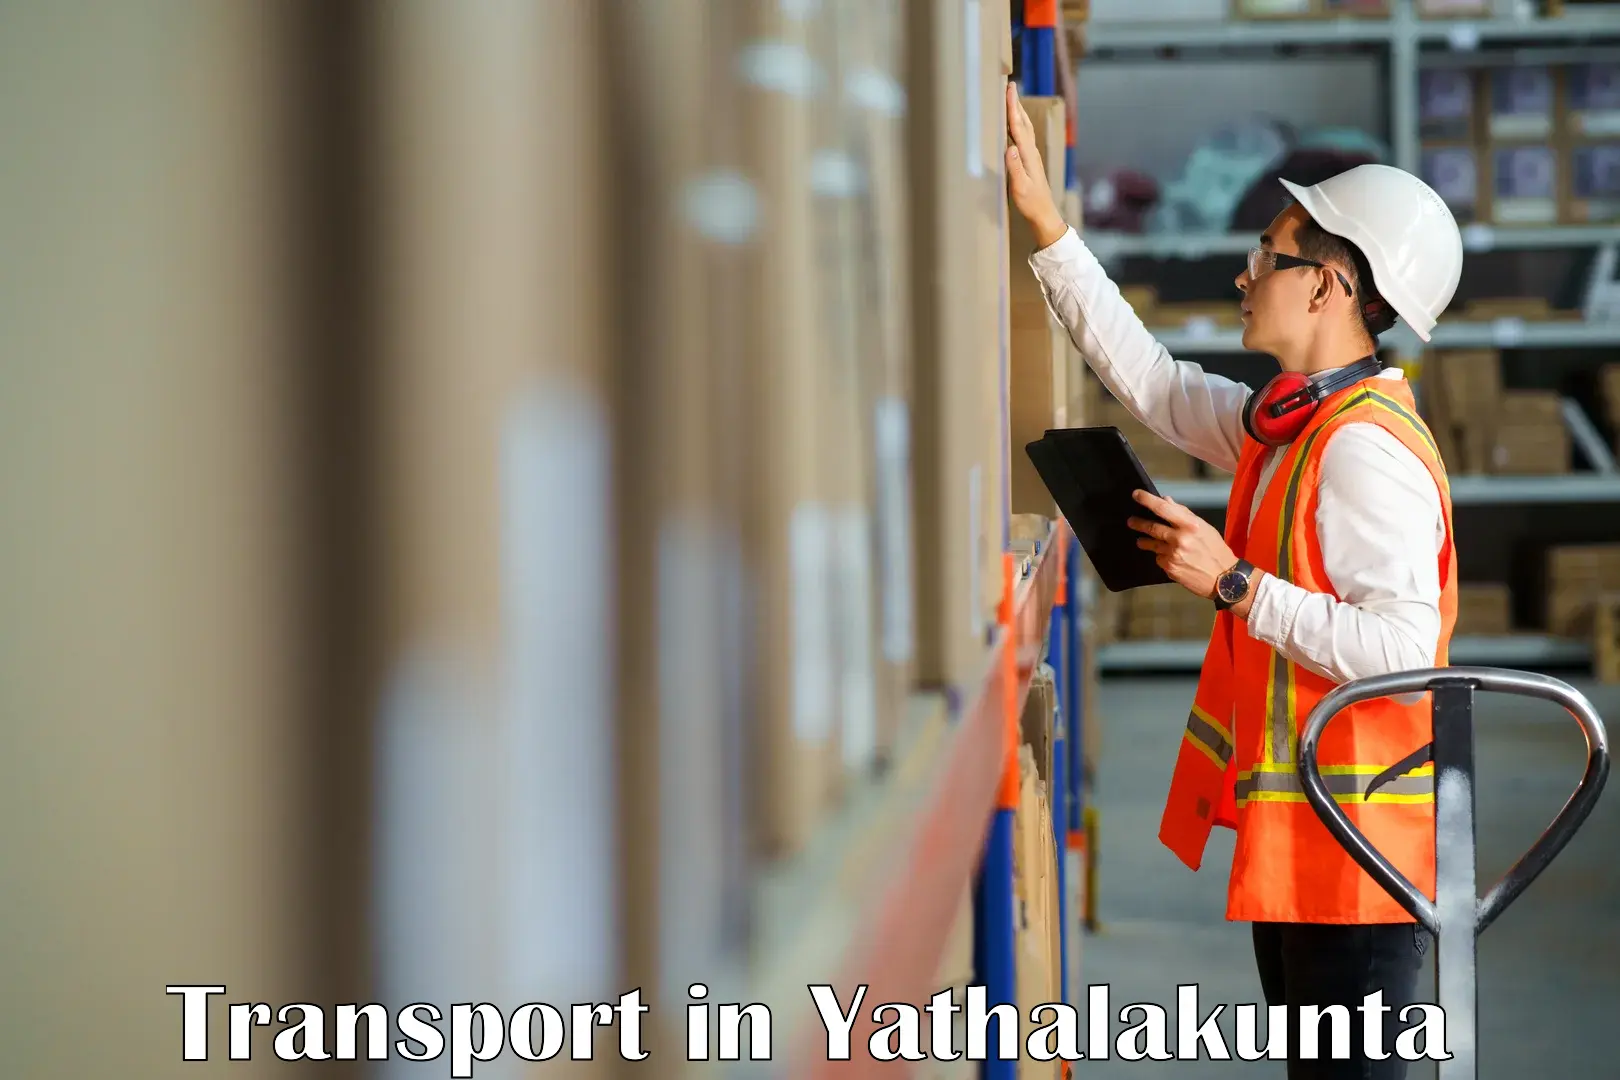 Express transport services in Yathalakunta